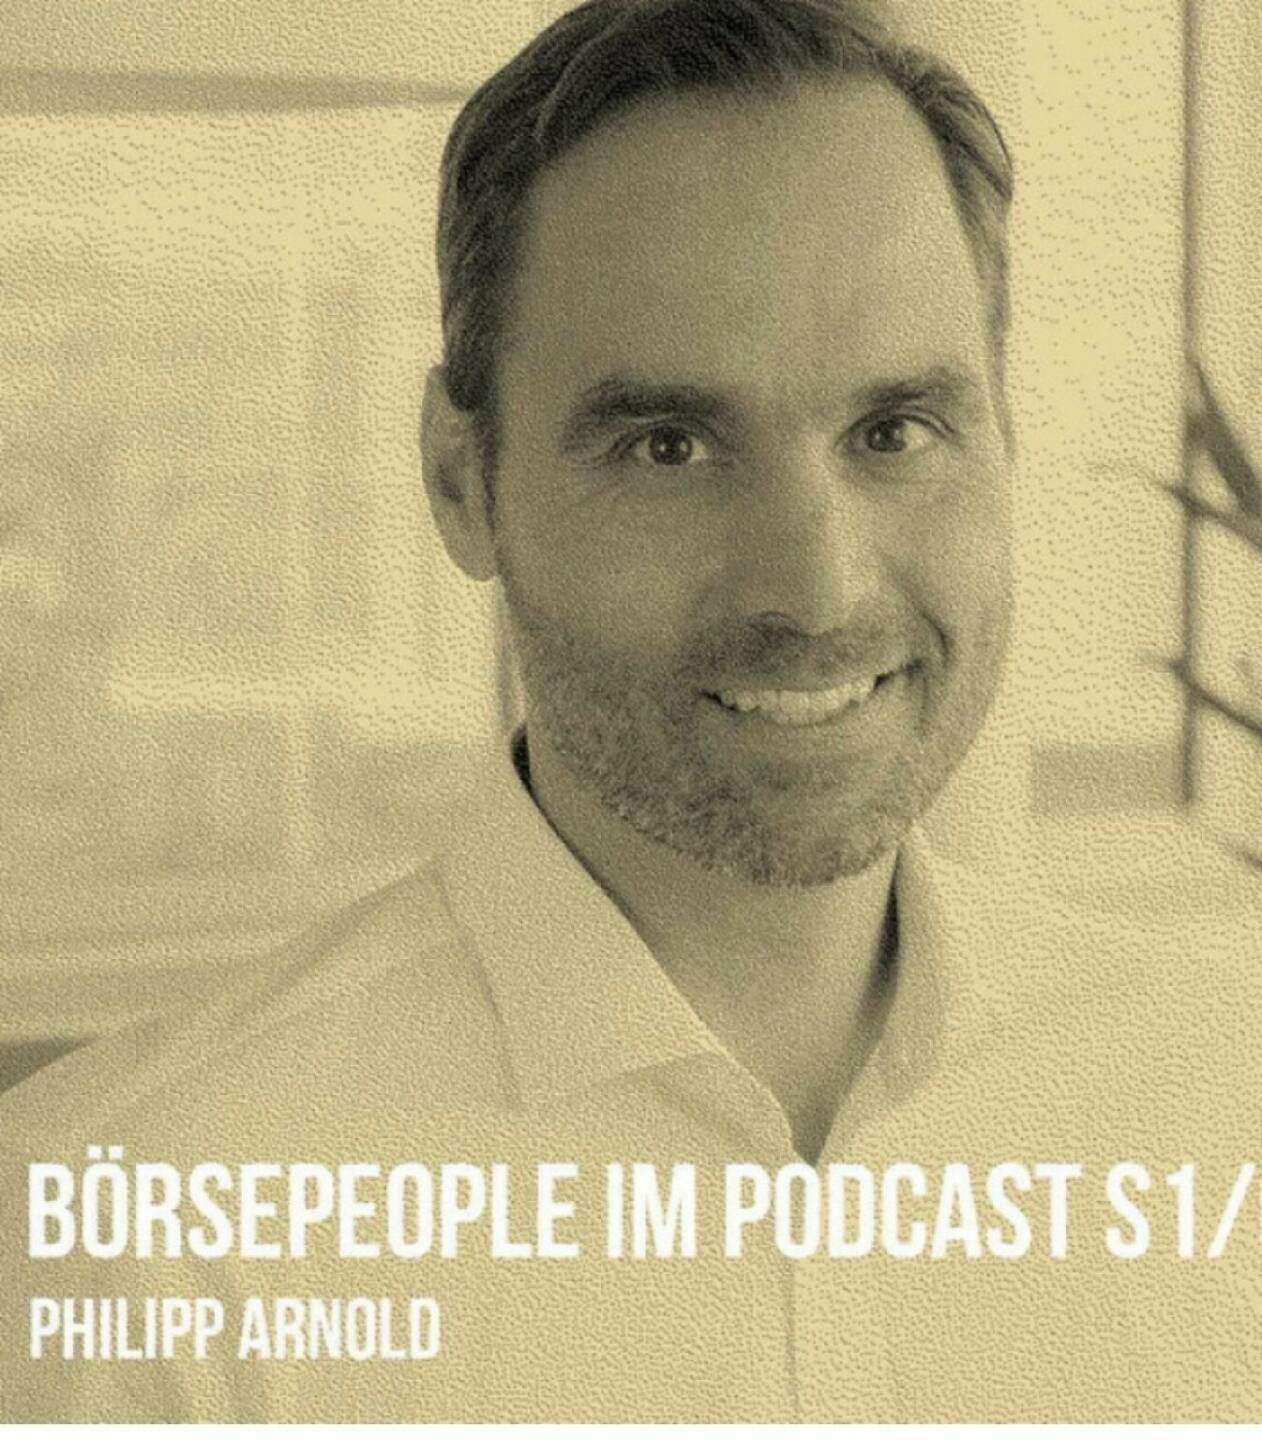 Philipp Arnold ist der 5. Gast in unserer Börsepeople Season 1 unter http://www.boersenradio.at/people  